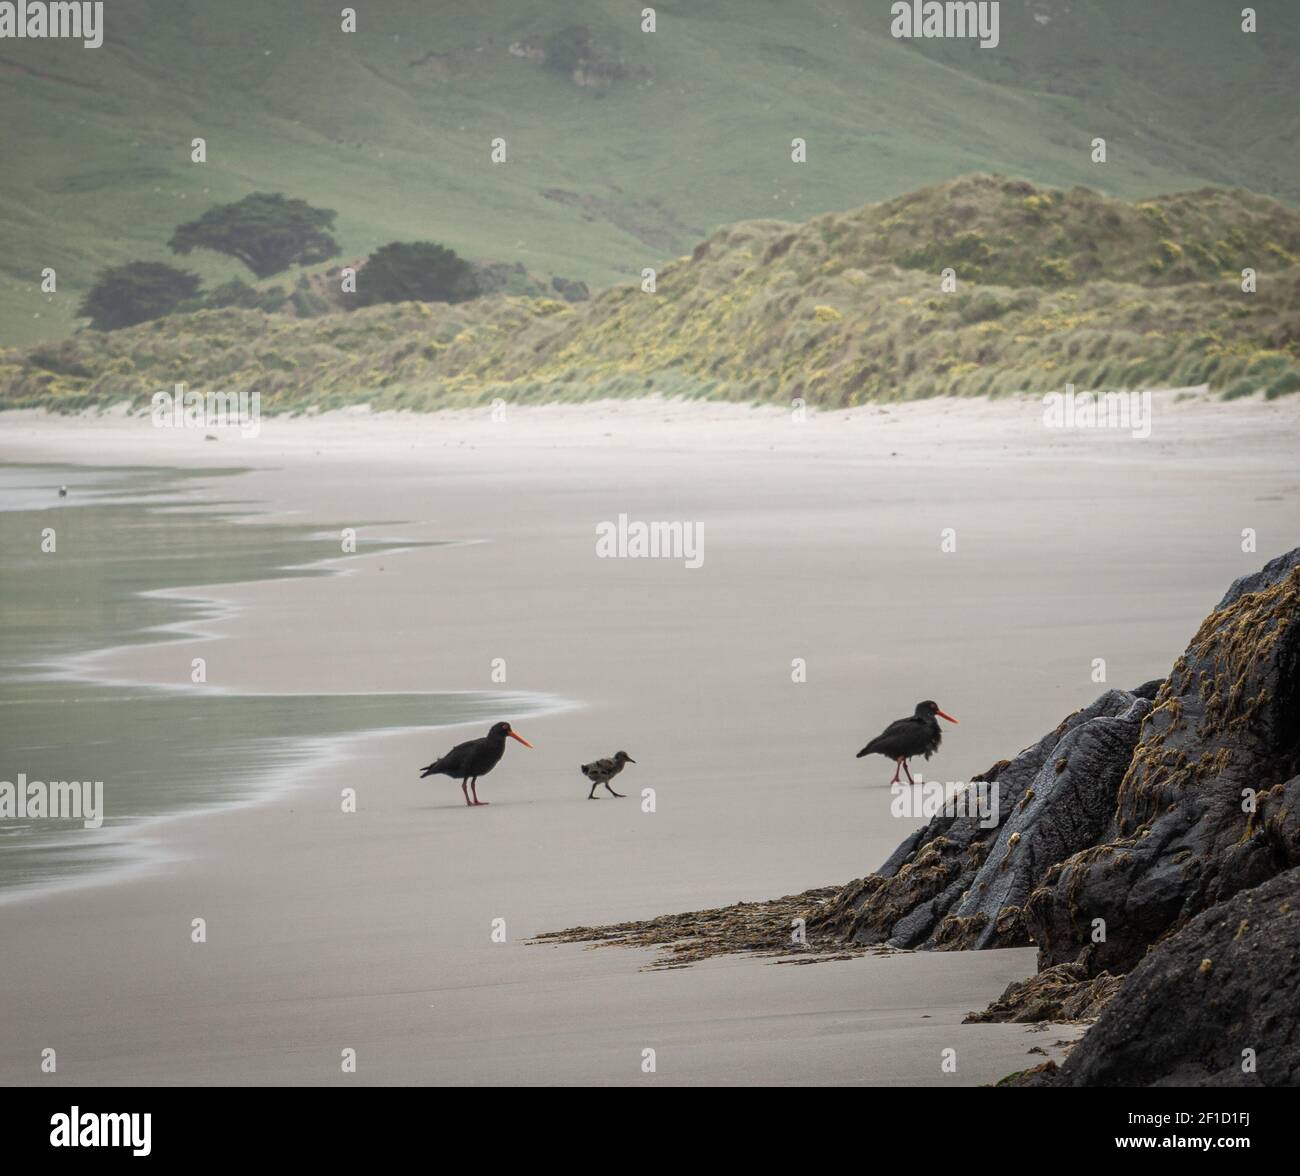 Two birds and their cub walking on the beach. Shot made at Allans Beach, Dunedin, Otago Peninsula, New Zealand Stock Photo